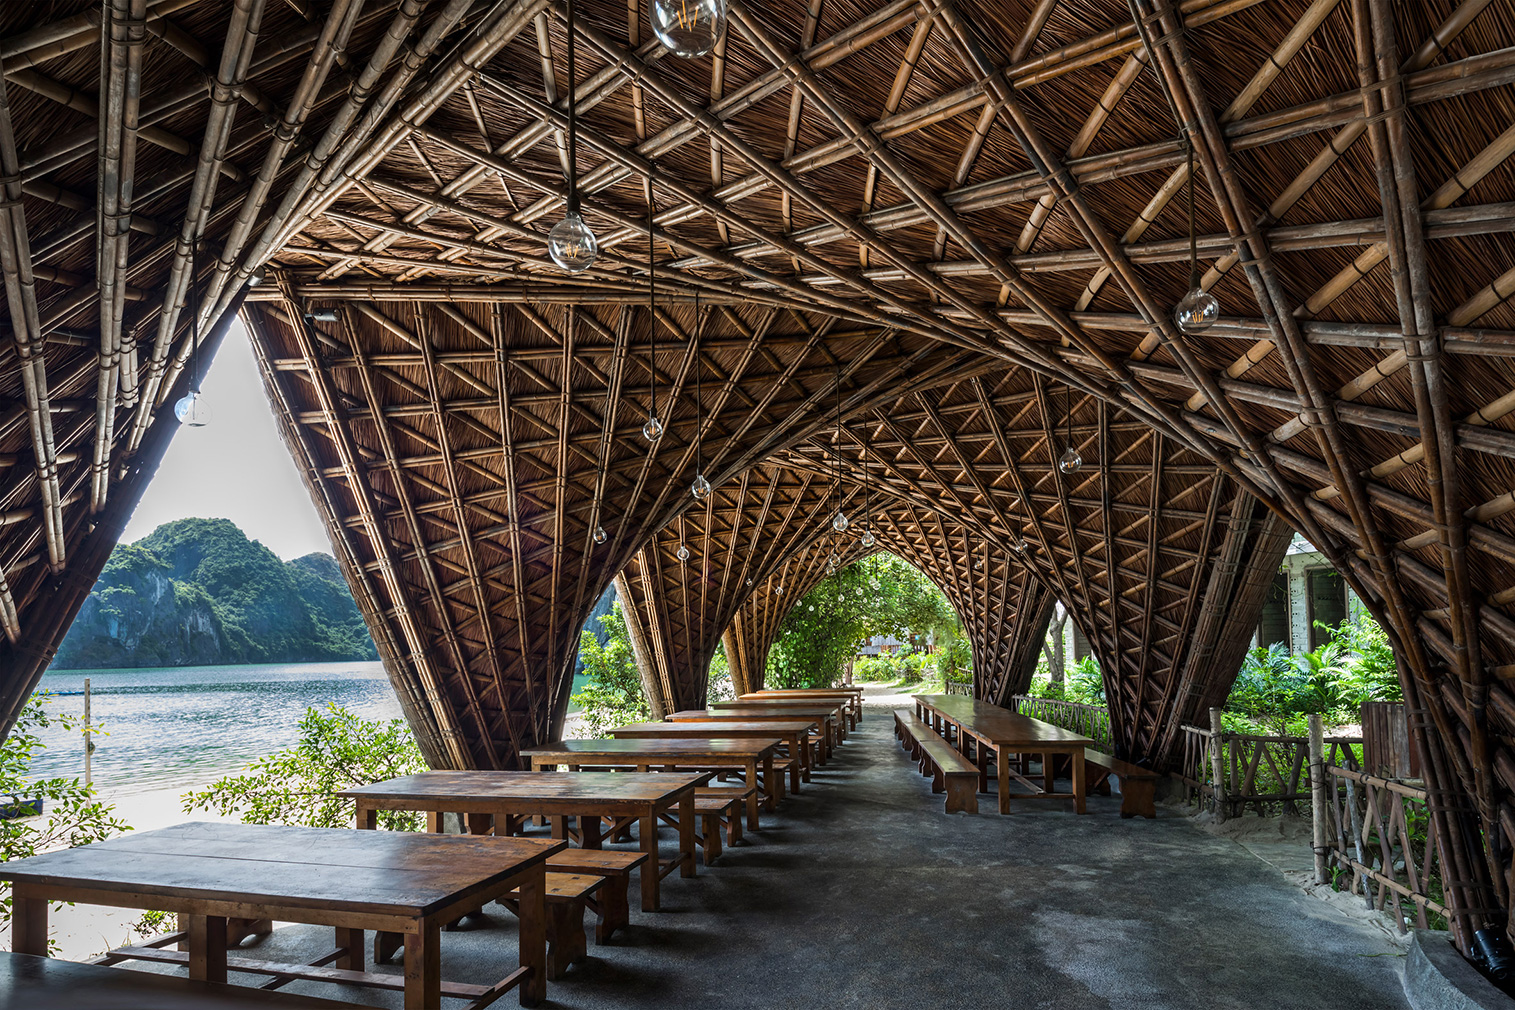 Vietnam’s Castaway Island Resort is built from bamboo